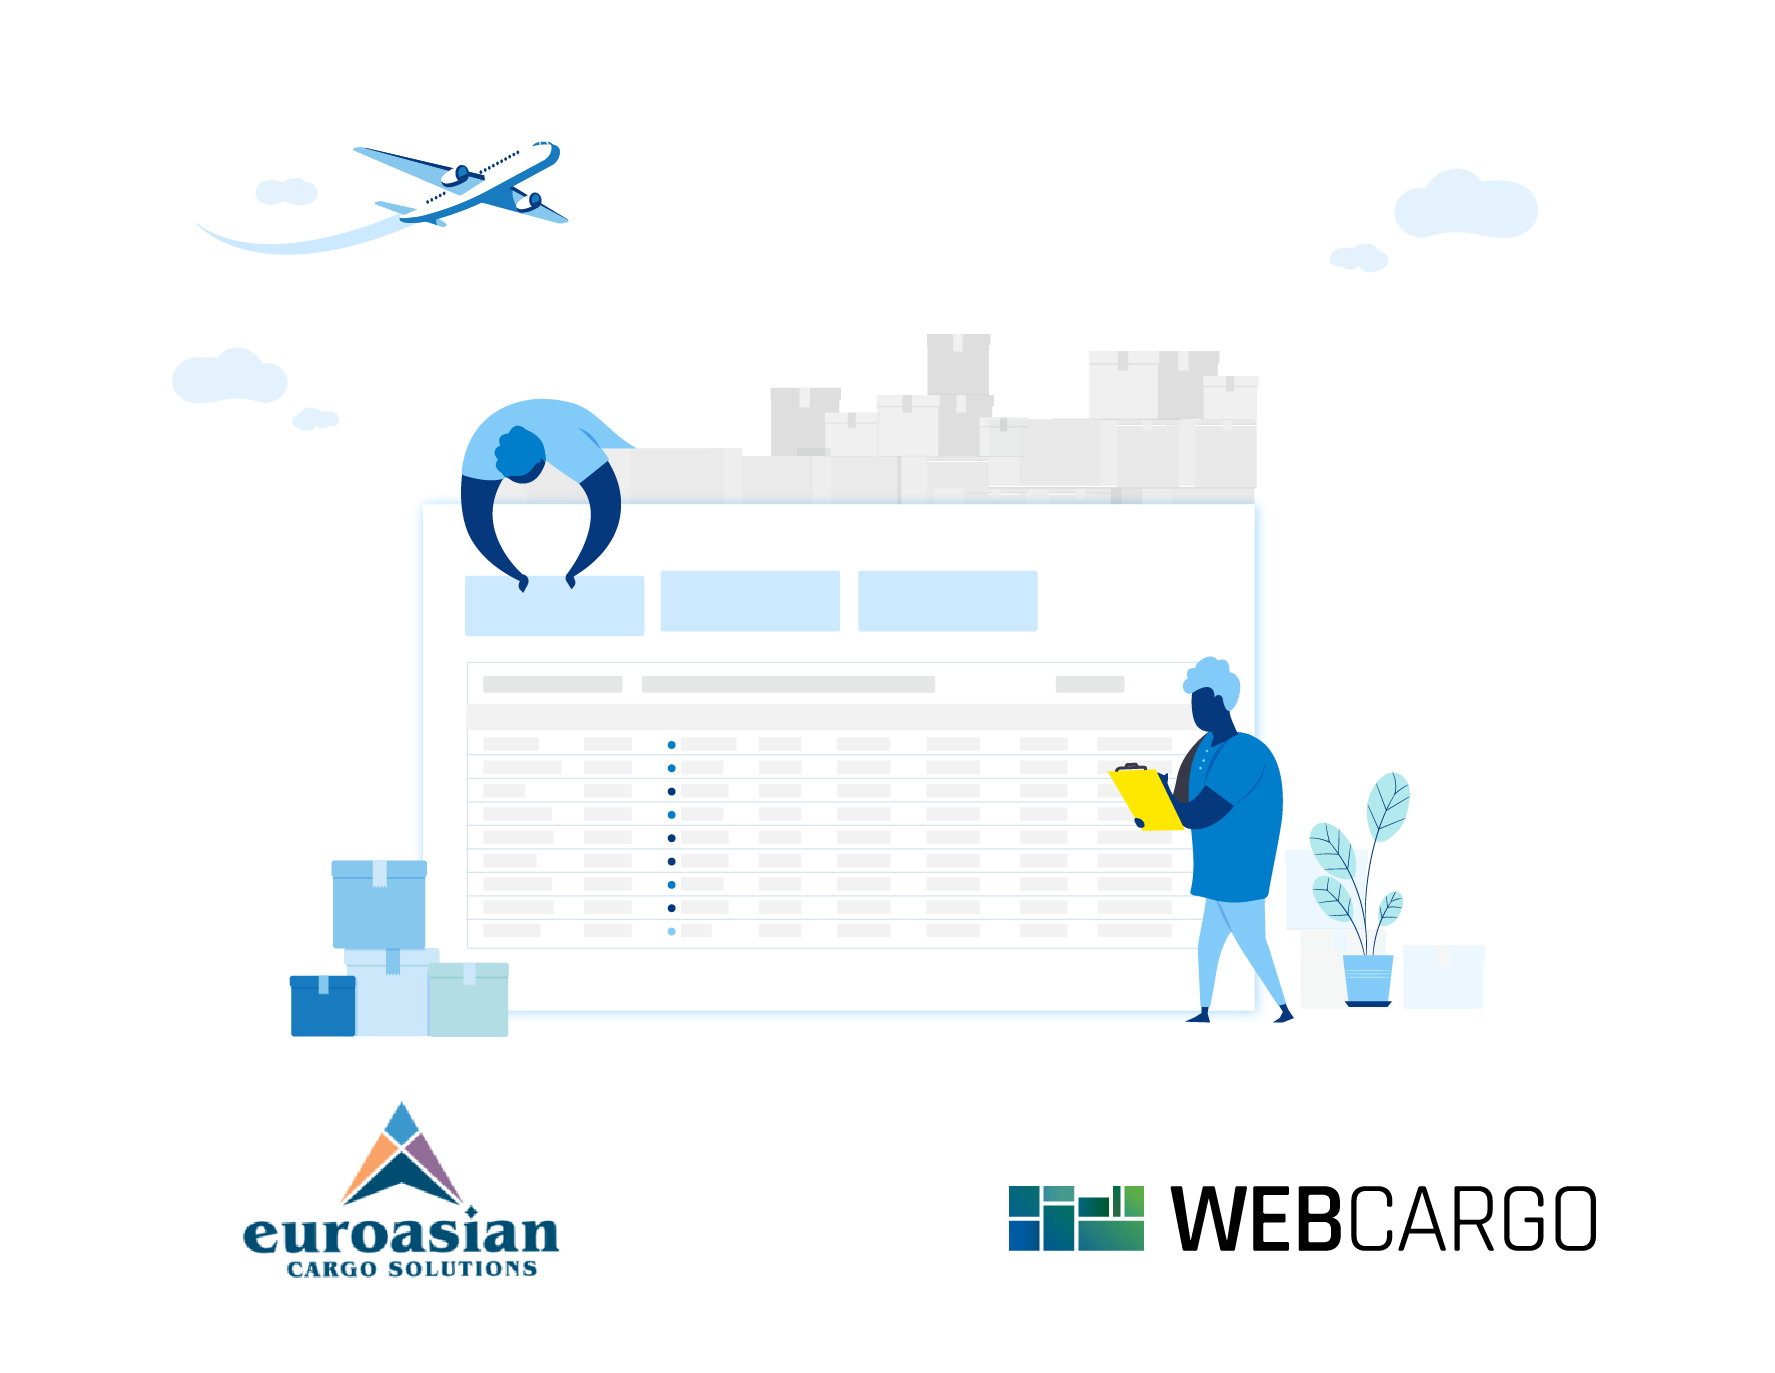 WebCargo and Euroasian partnership